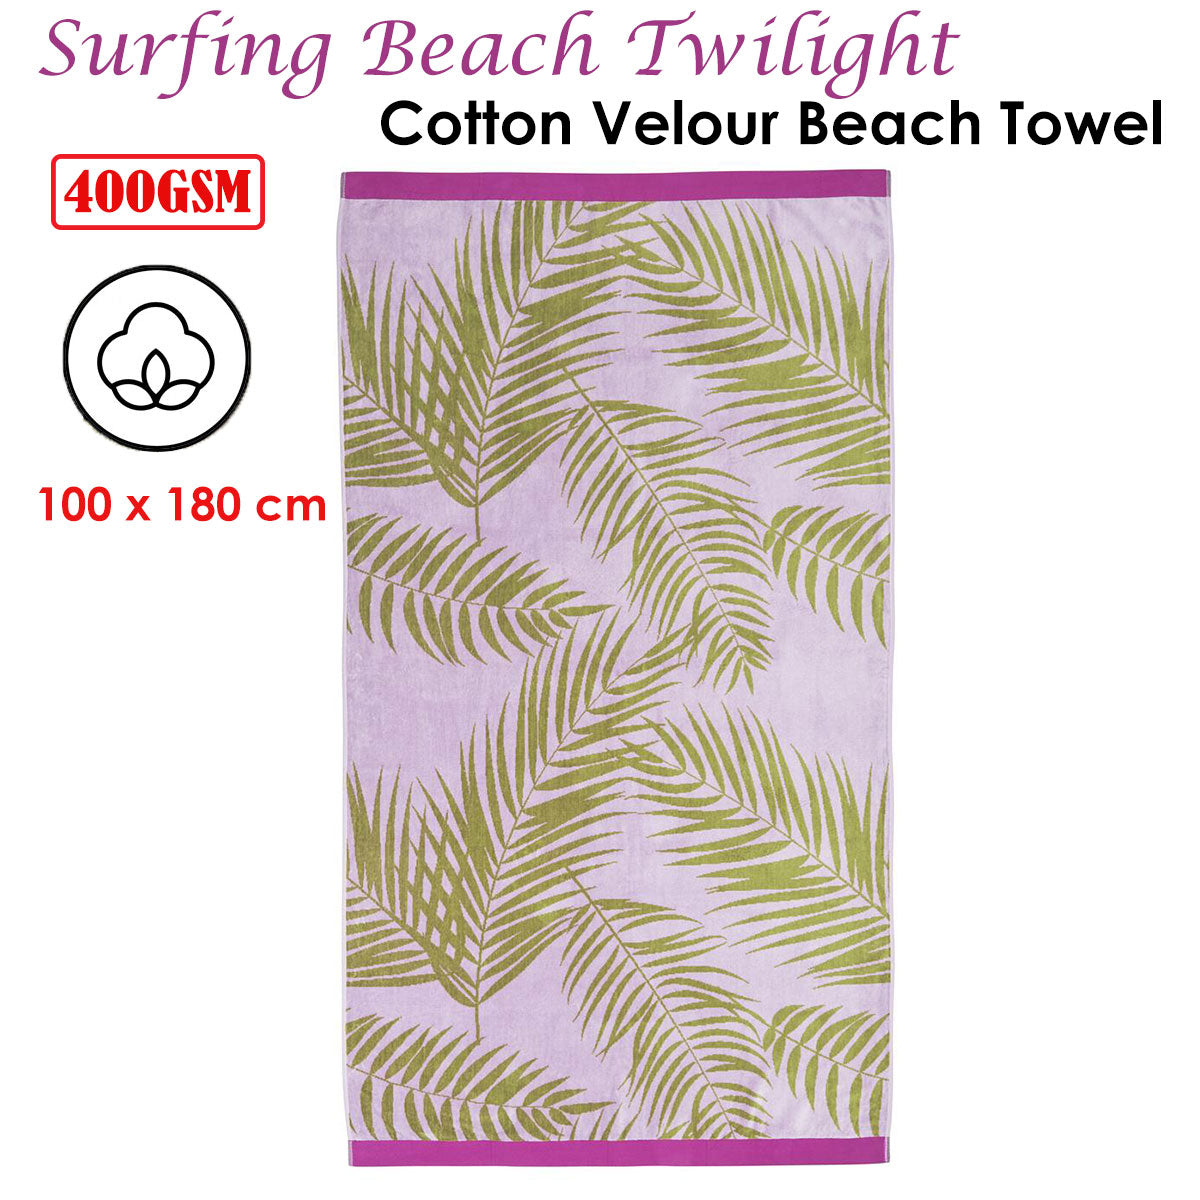 Bedding House Surfing Beach Twilight Cotton Velour Beach Towel - Beach Towels - Zanlana Design and Home Decor